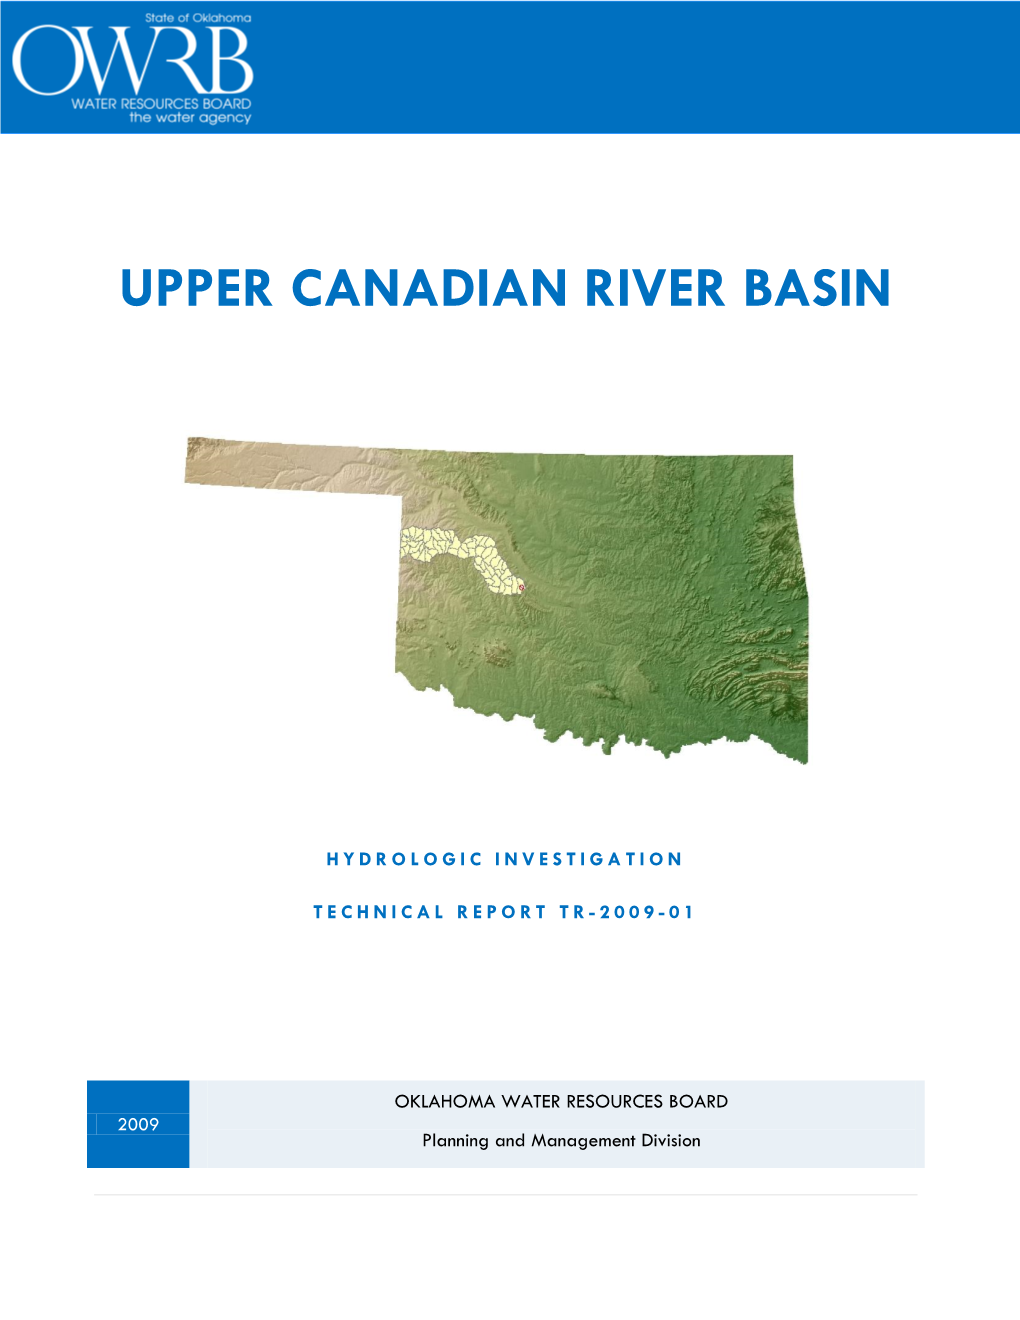 Hydrologic Investigation of the Upper Canadian River Basin